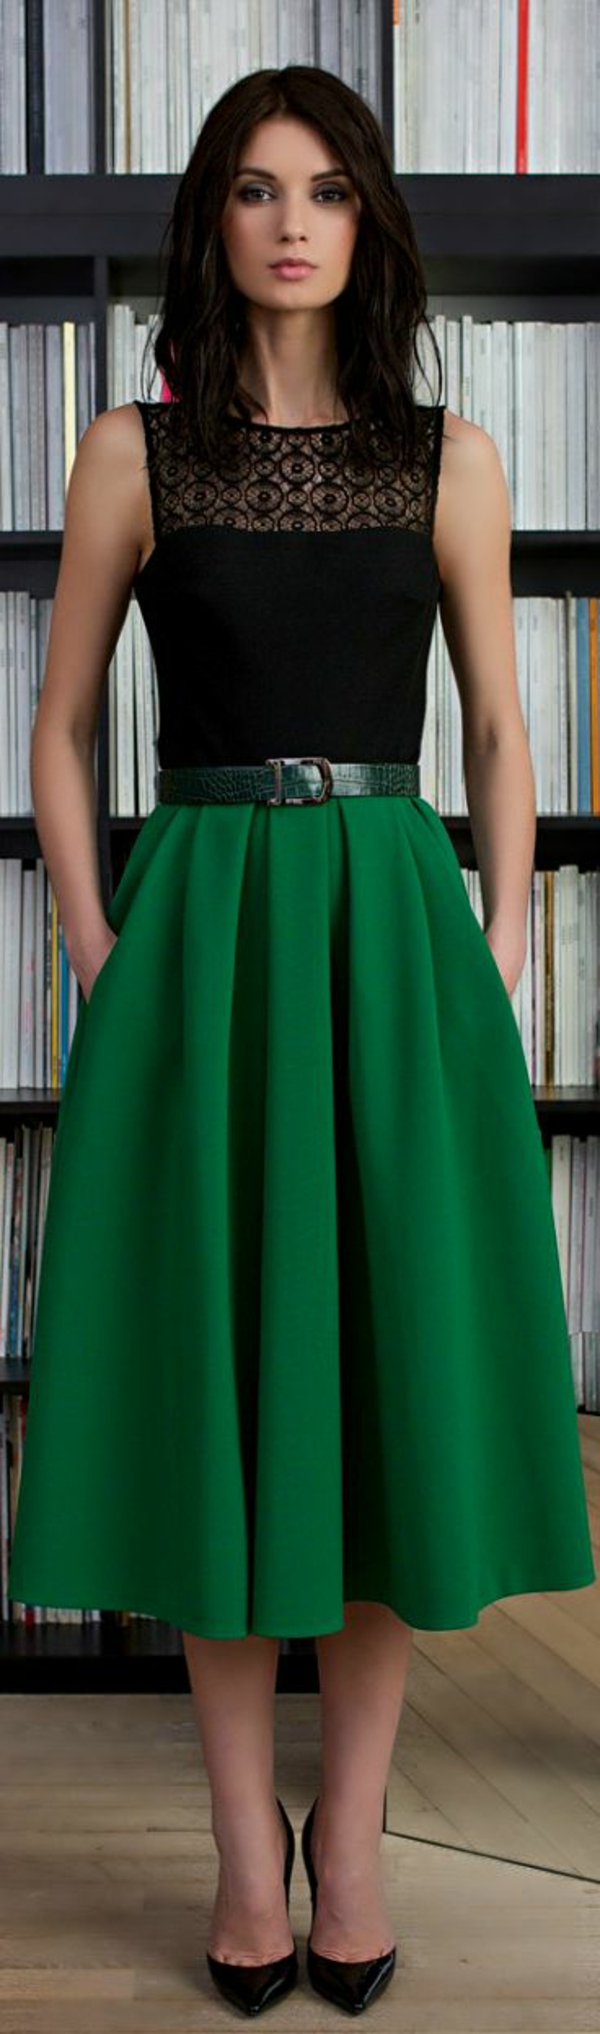 jupe-longue-midi-verte-femme-moderne-bibliothèque-mode